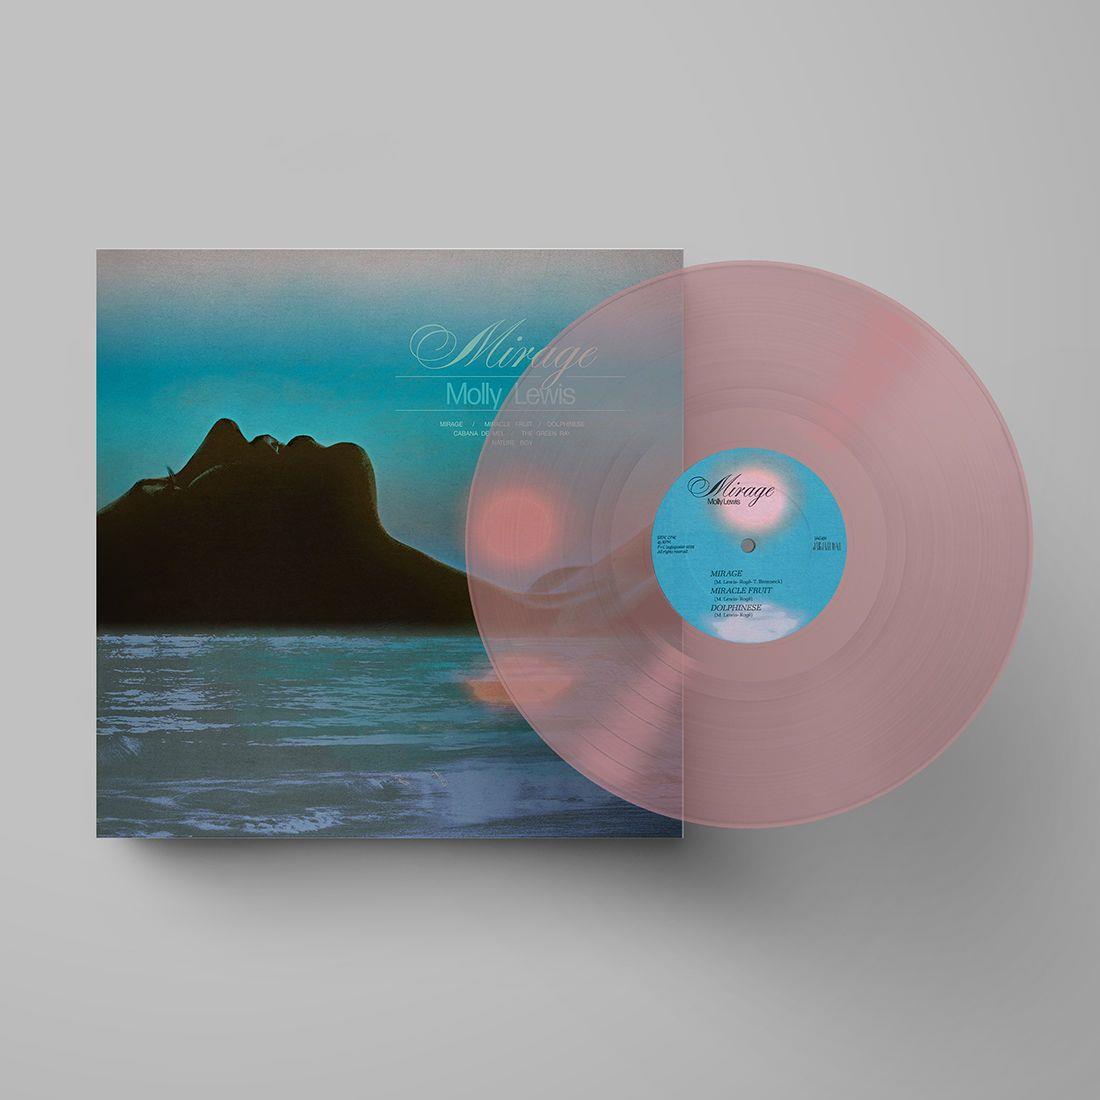 mirage ep (12in translucent pink glass vinyl)